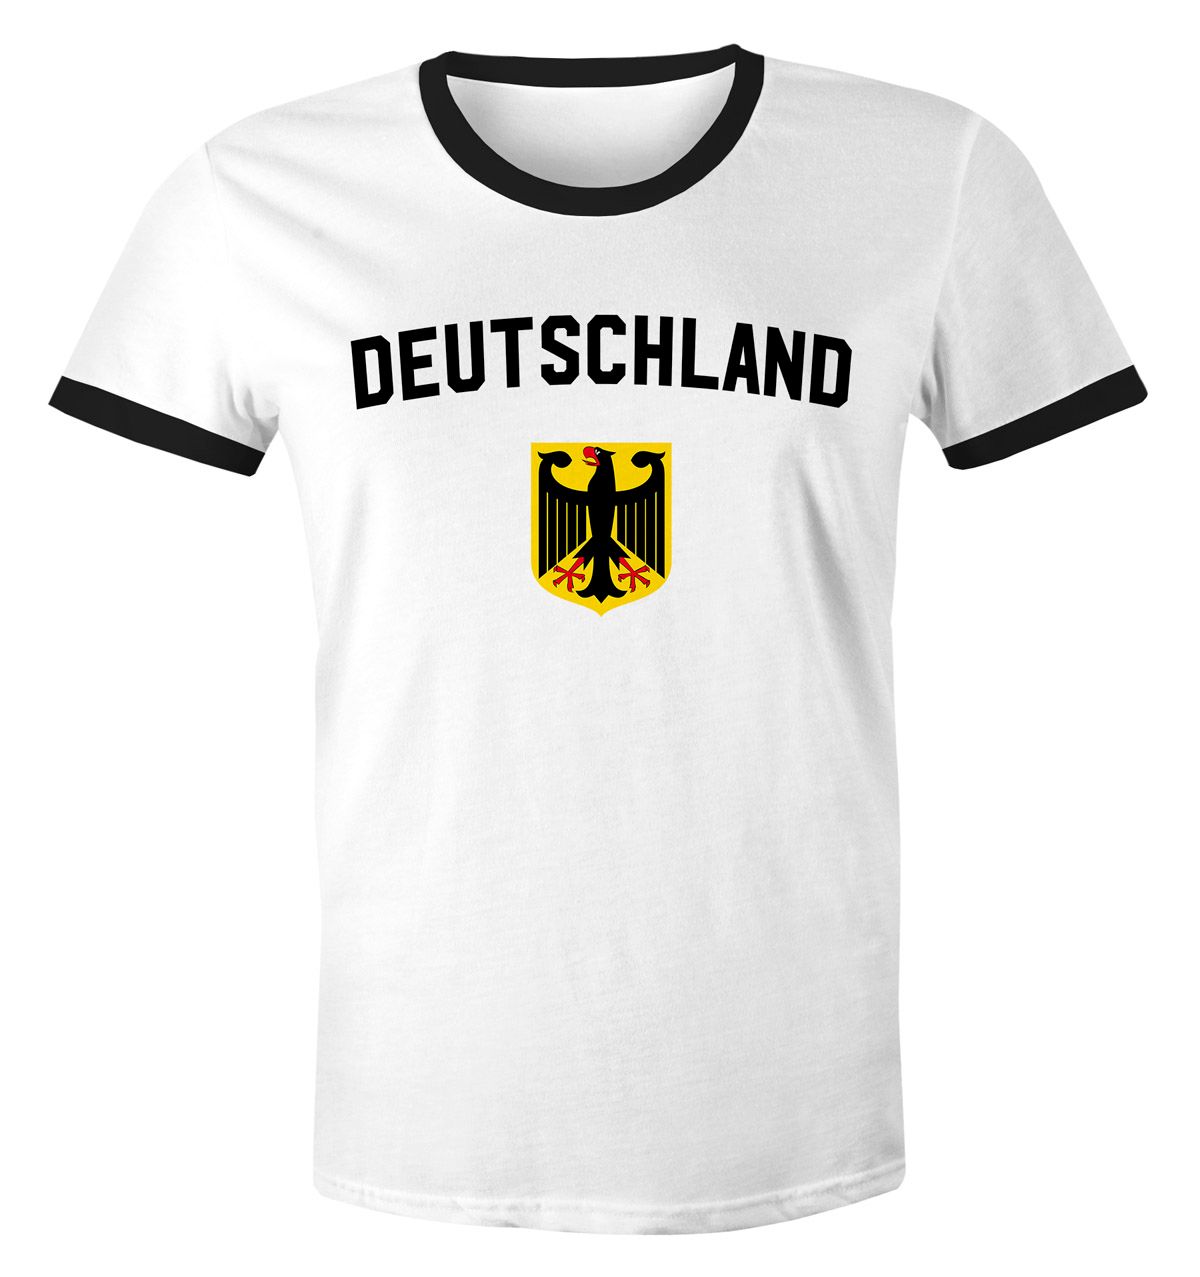 Wm Shirt 2018 Fussball Deutschland Adler Wappen Herren Retro Moonworks Ebay